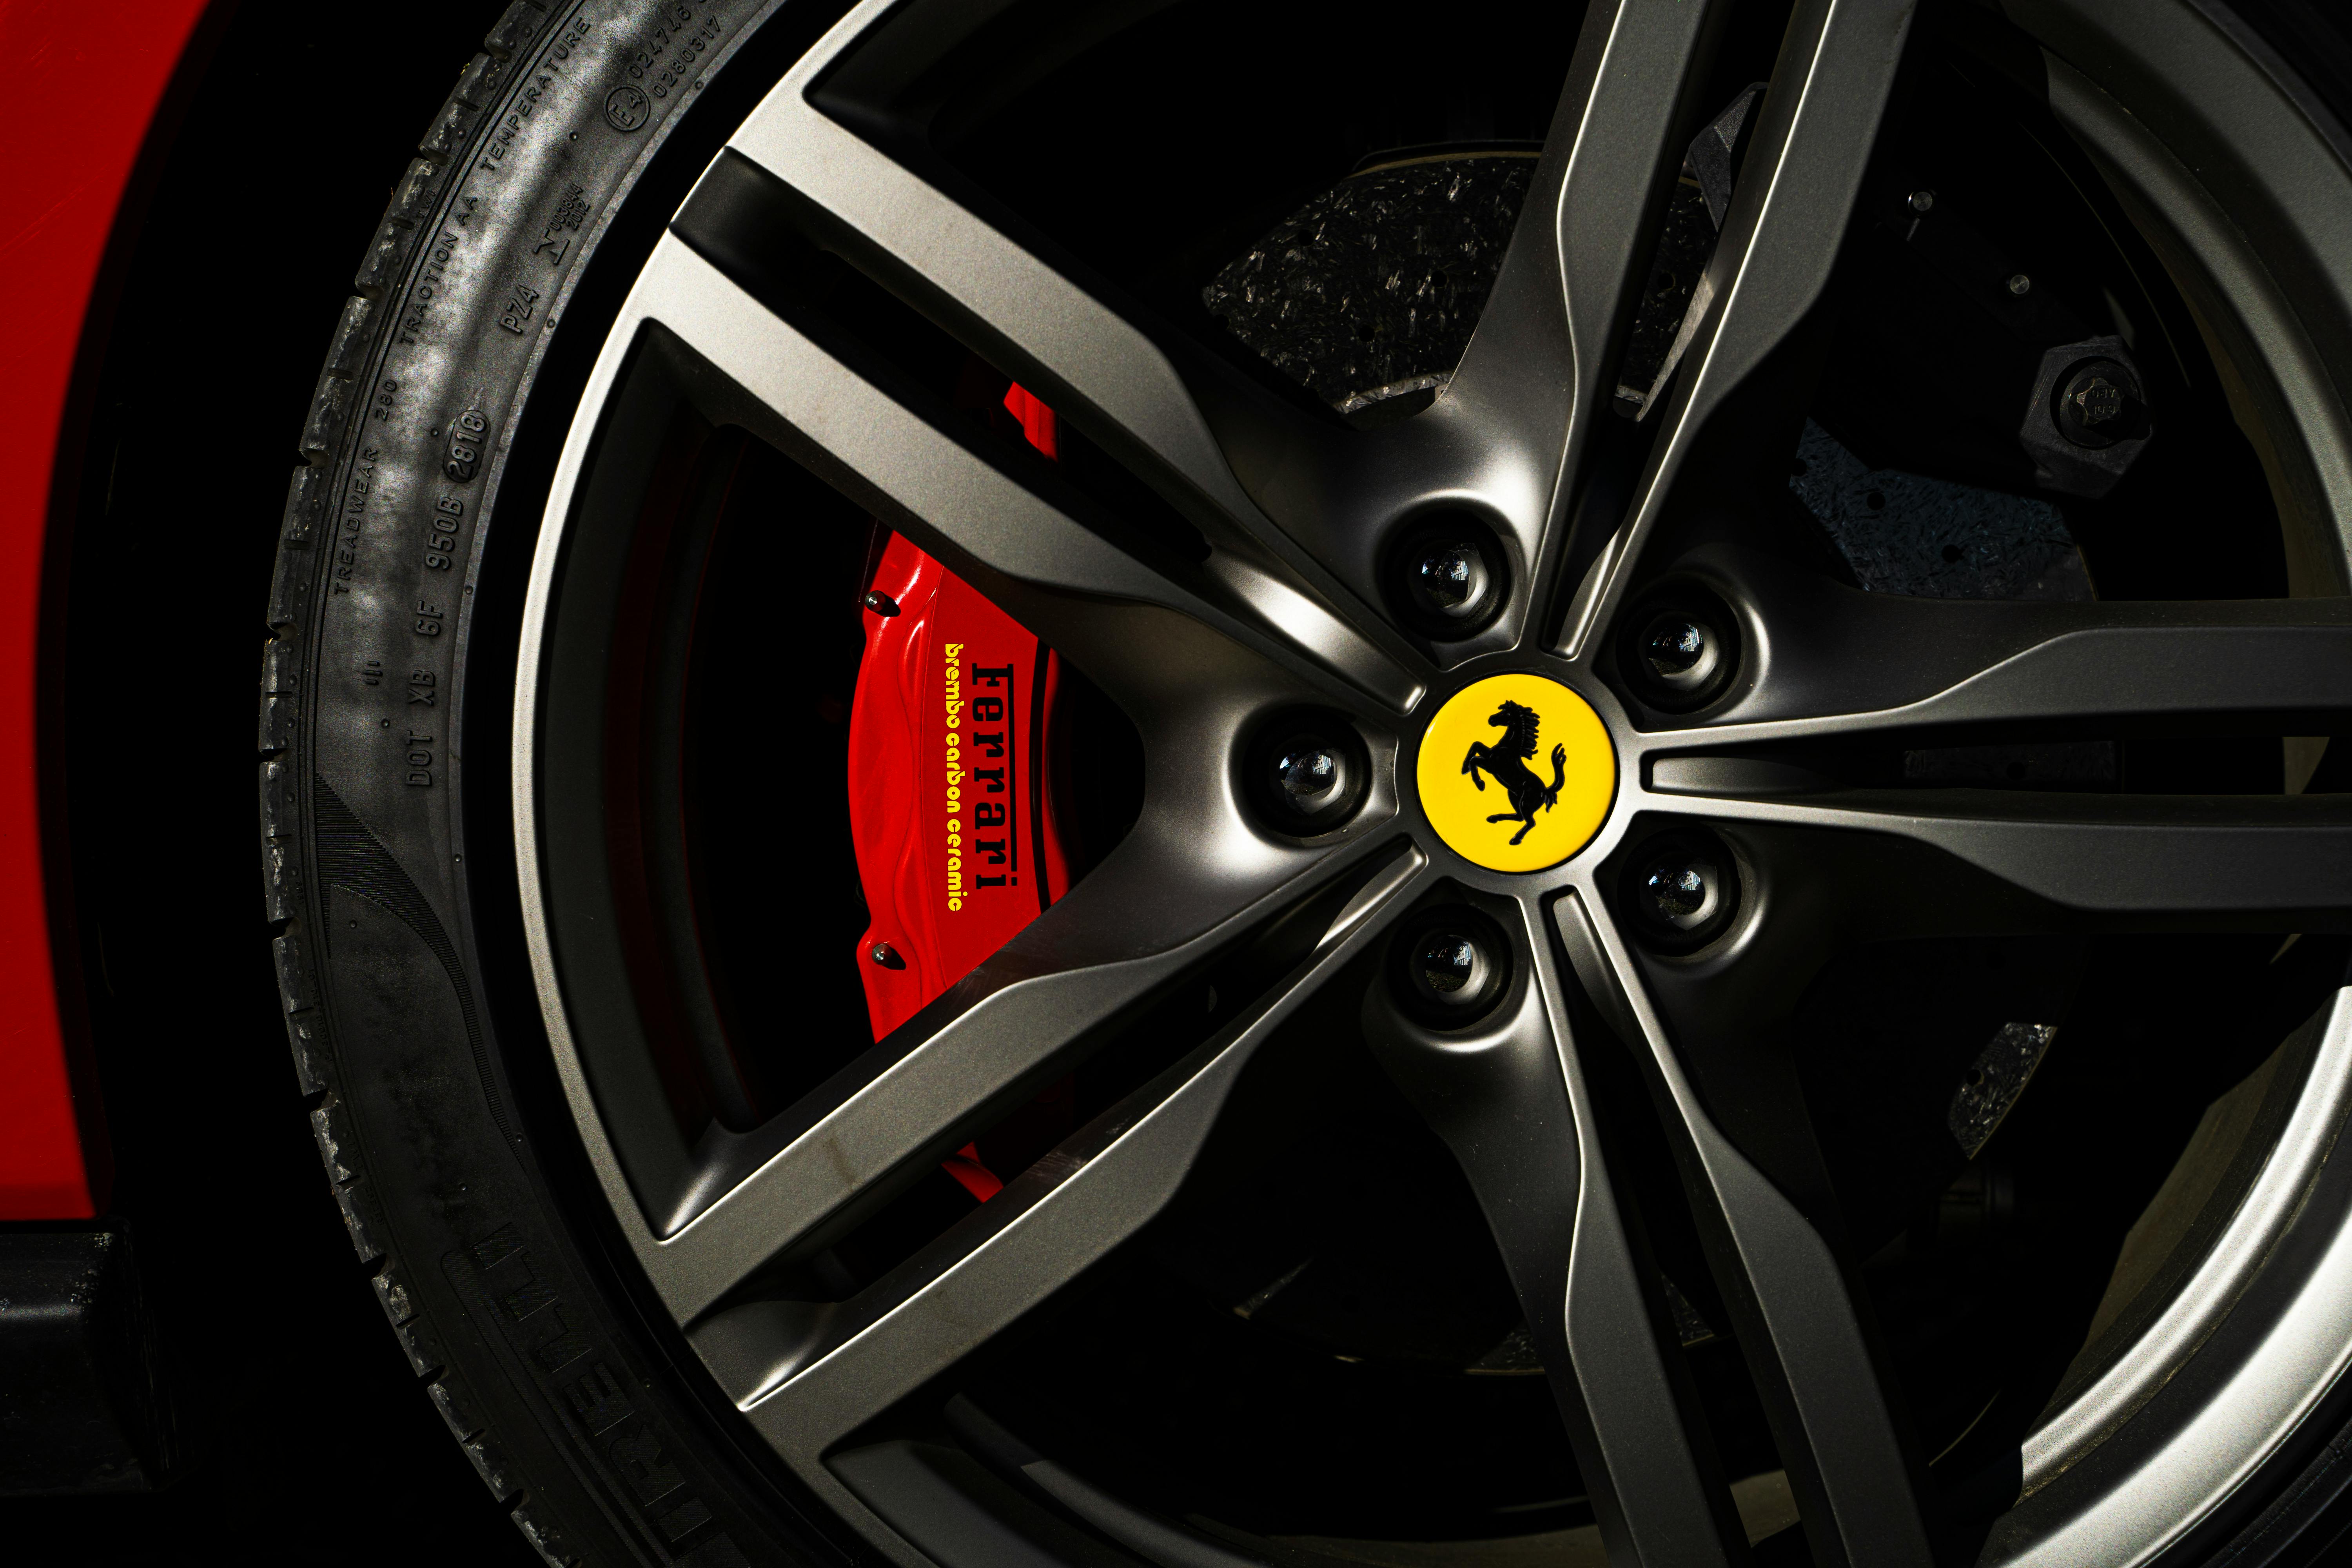 Ferrari Photos, Download The BEST Free Ferrari Stock Photos & HD Images